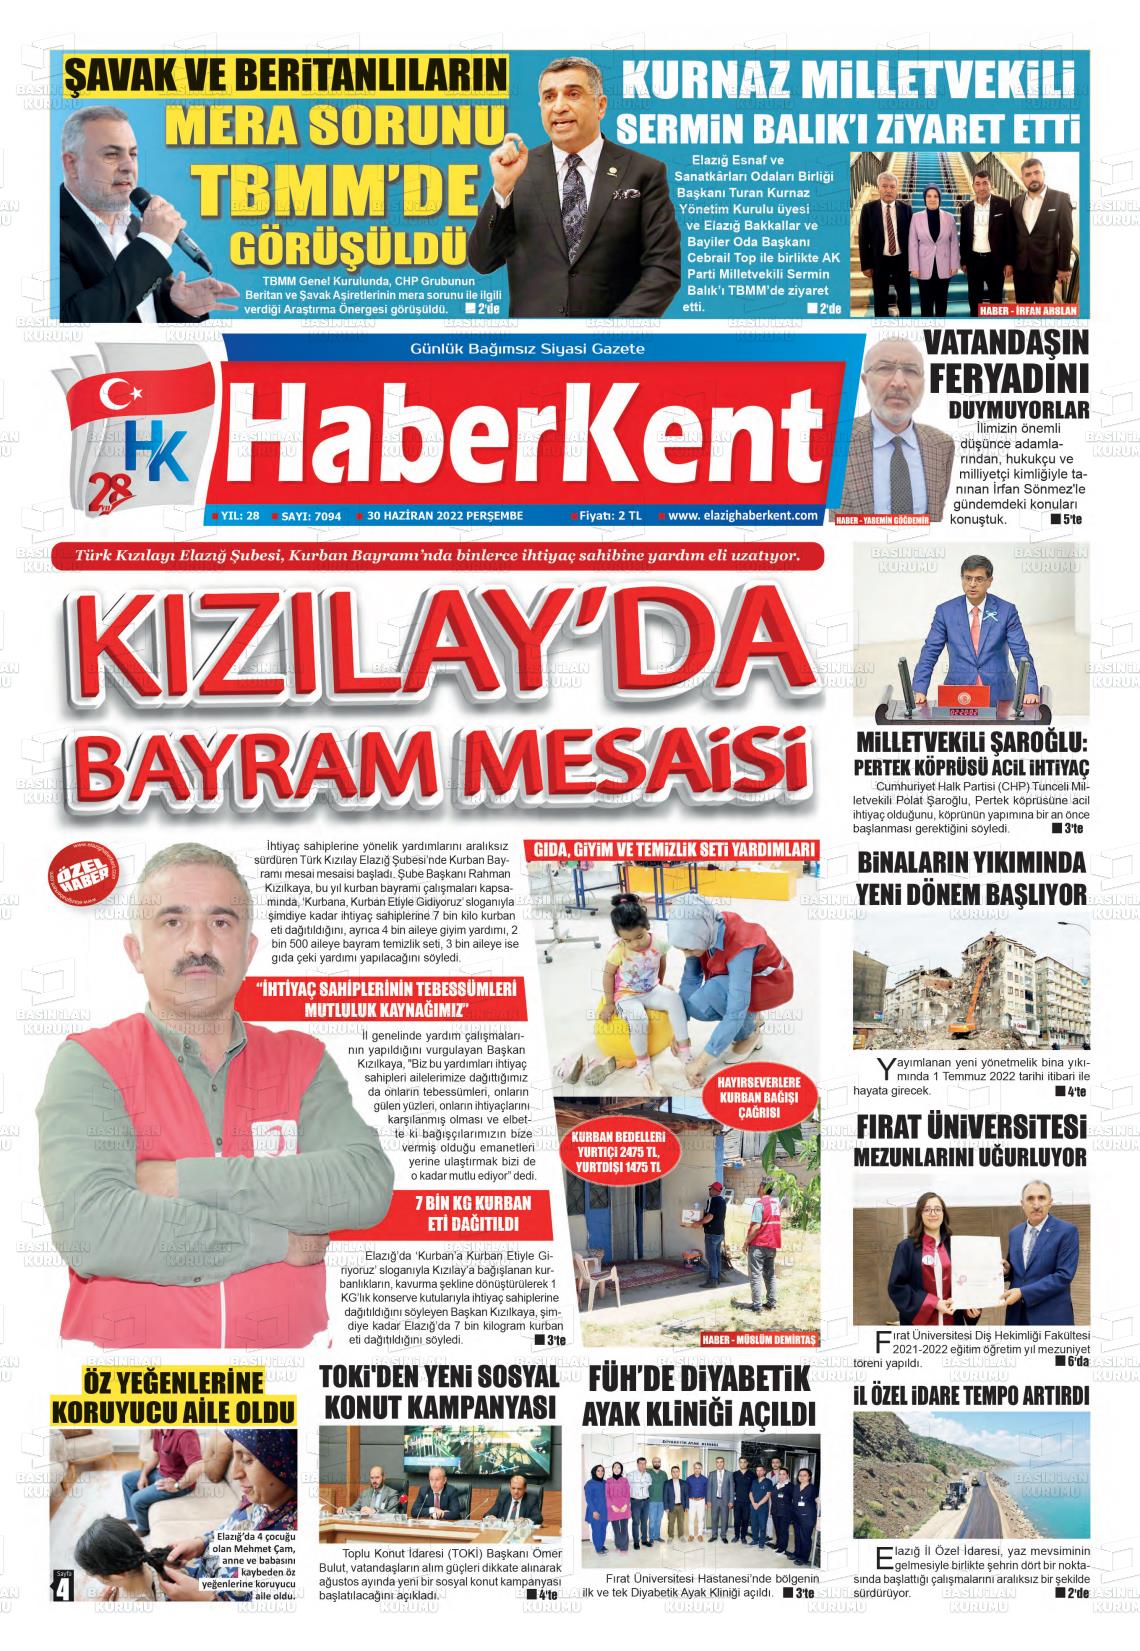 30 Haziran 2022 Elazığ Haberkent Gazete Manşeti